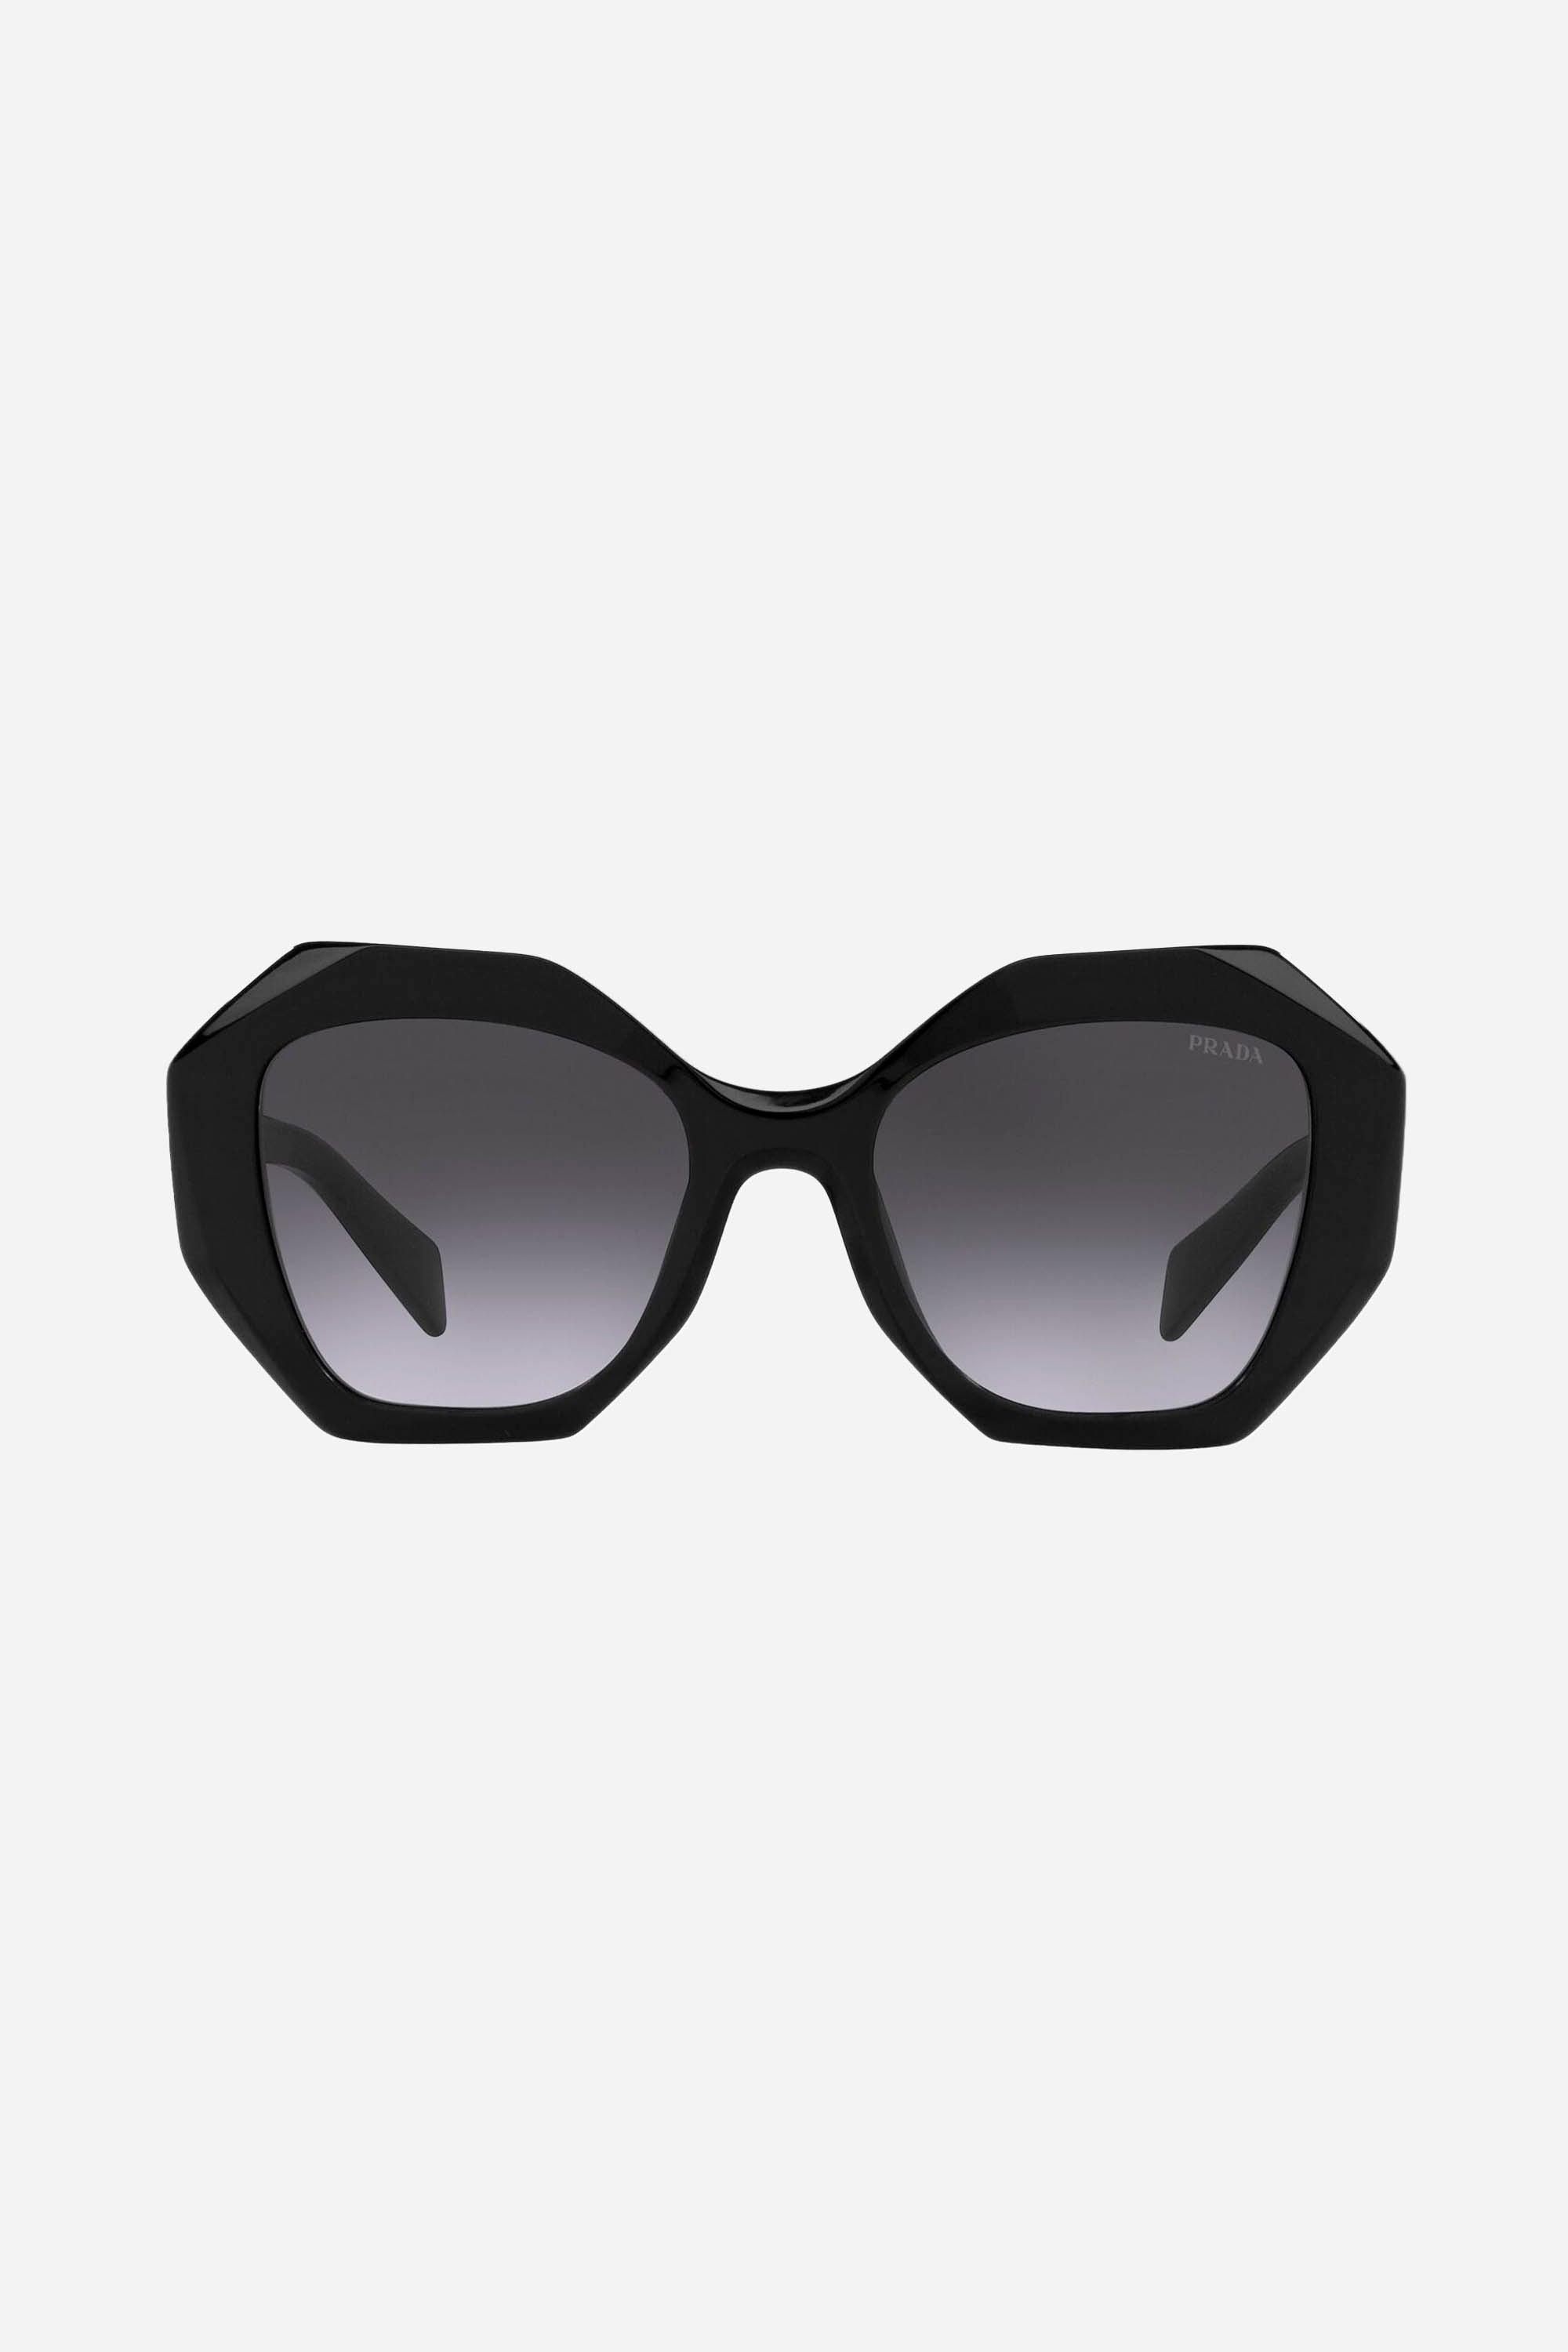 Prada hexagonal black sunglasses - Eyewear Club